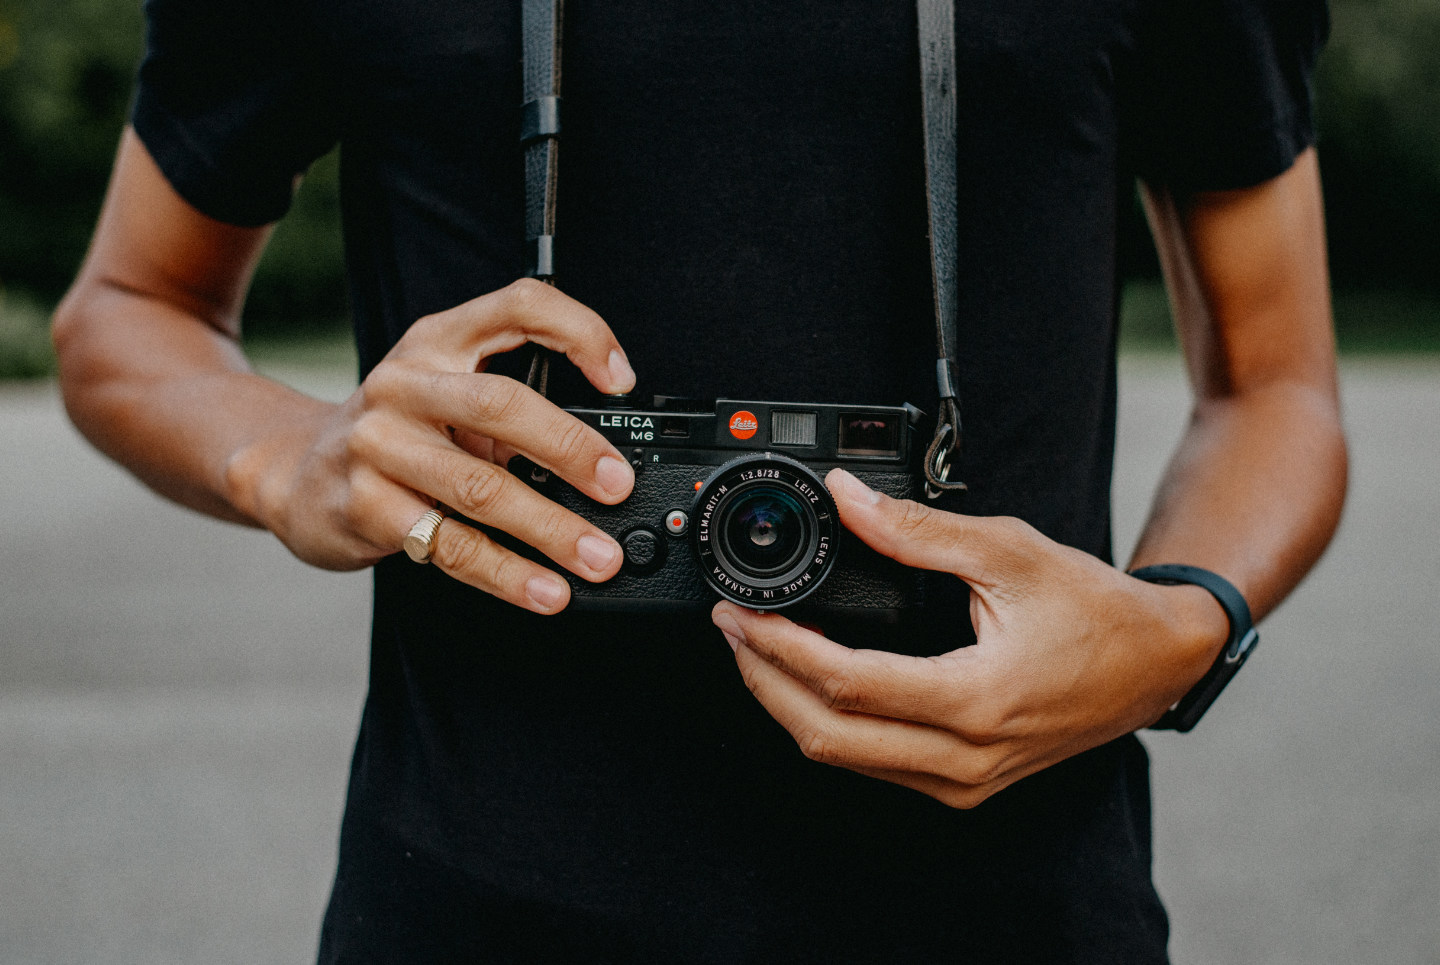 Leica M6 Classic in Djibril's hands to show the ergonomics